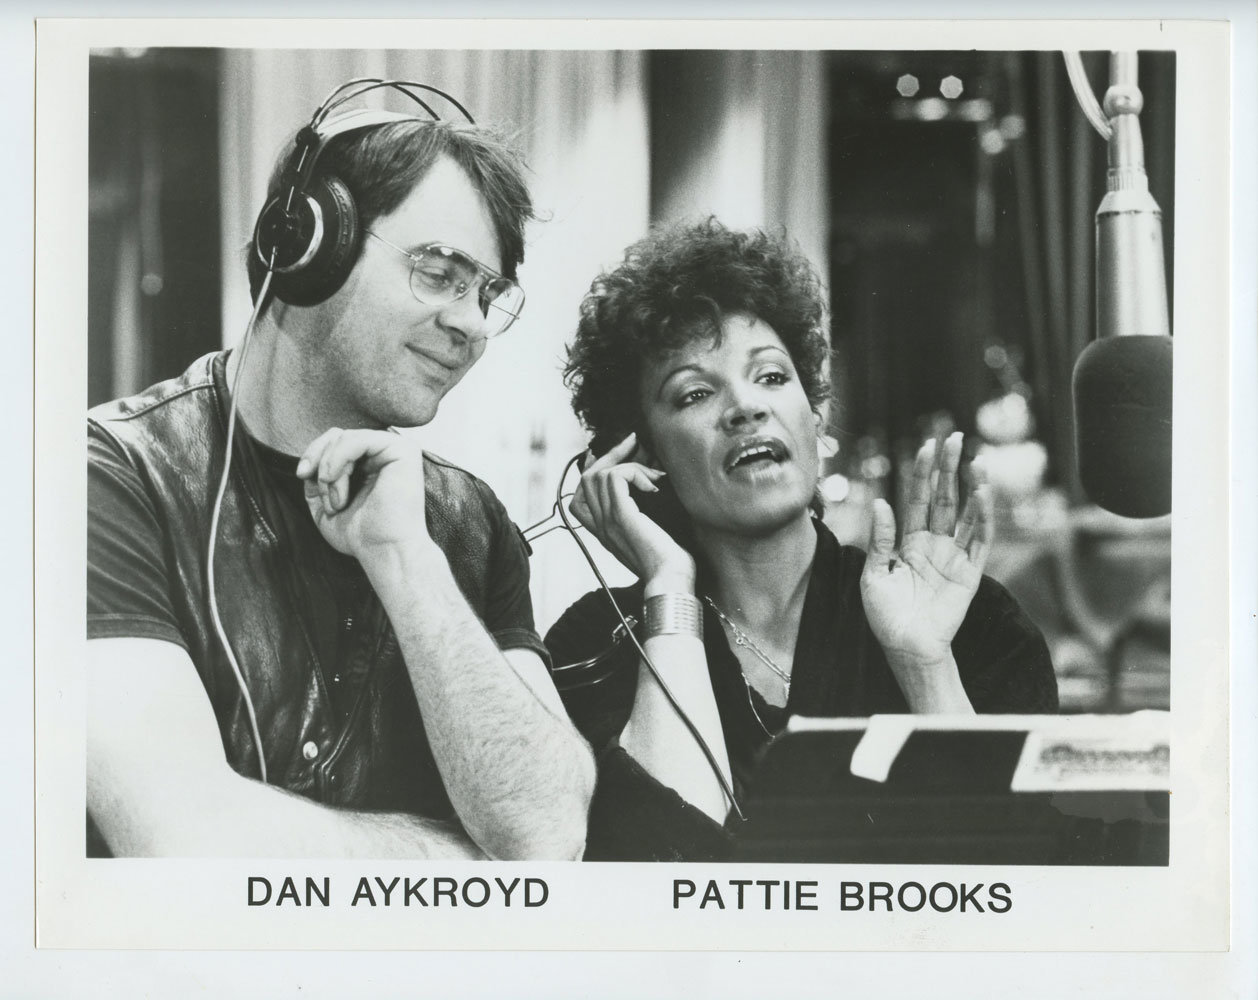 Dan Aykroyd & Pattie Brooks Photo 1983 MCA Records